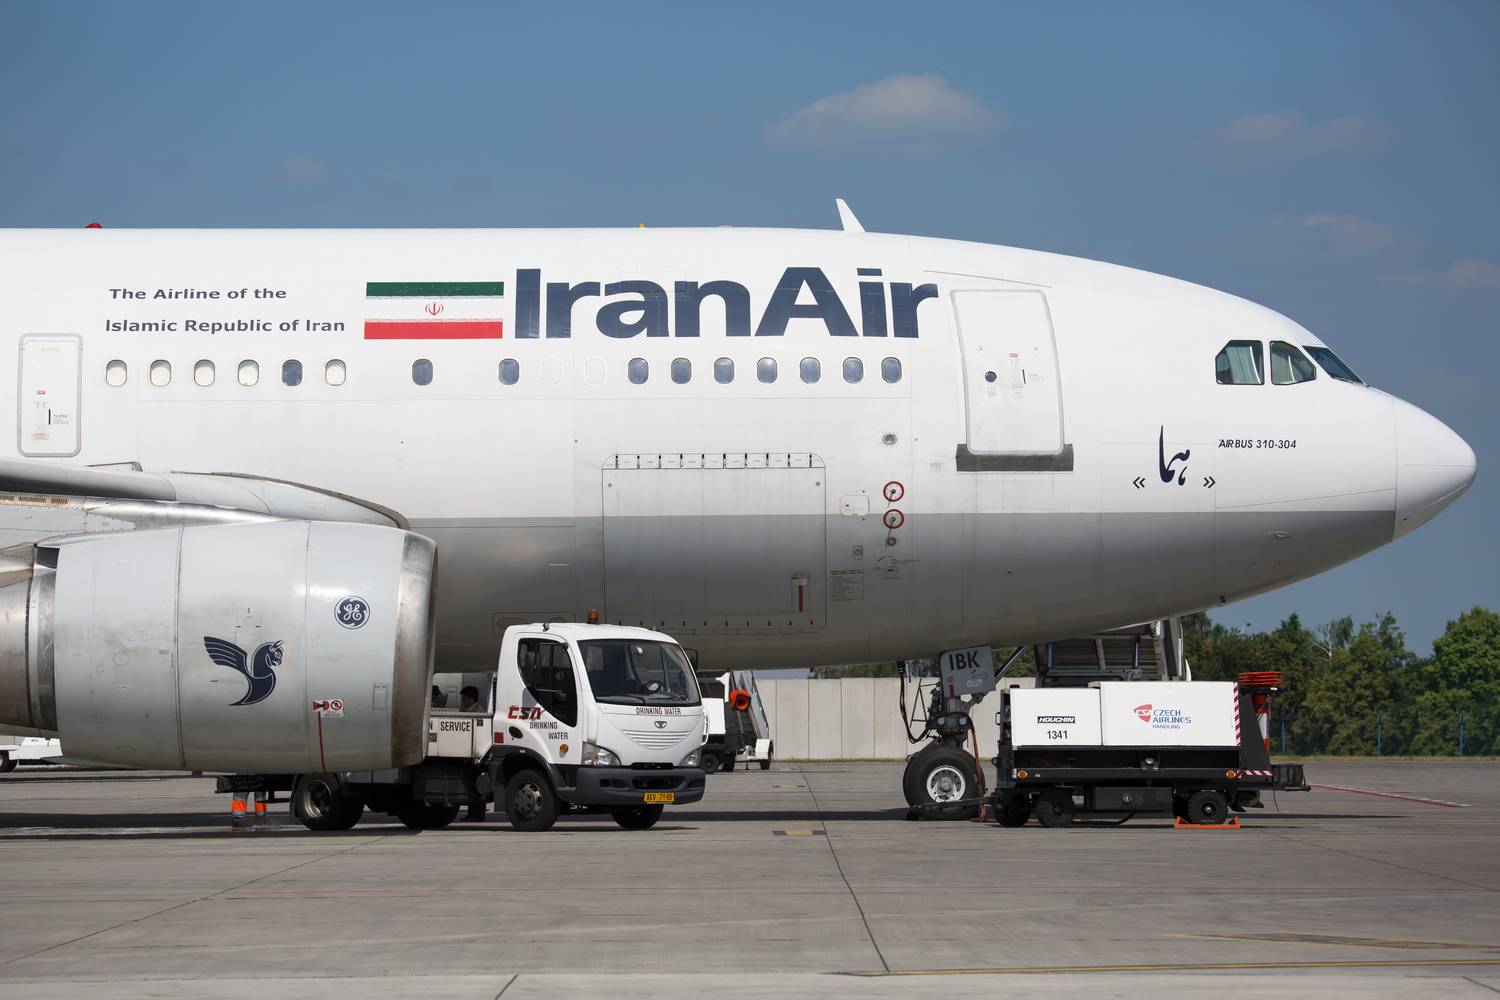 An IranAir Airbus A310 parked at an airport.